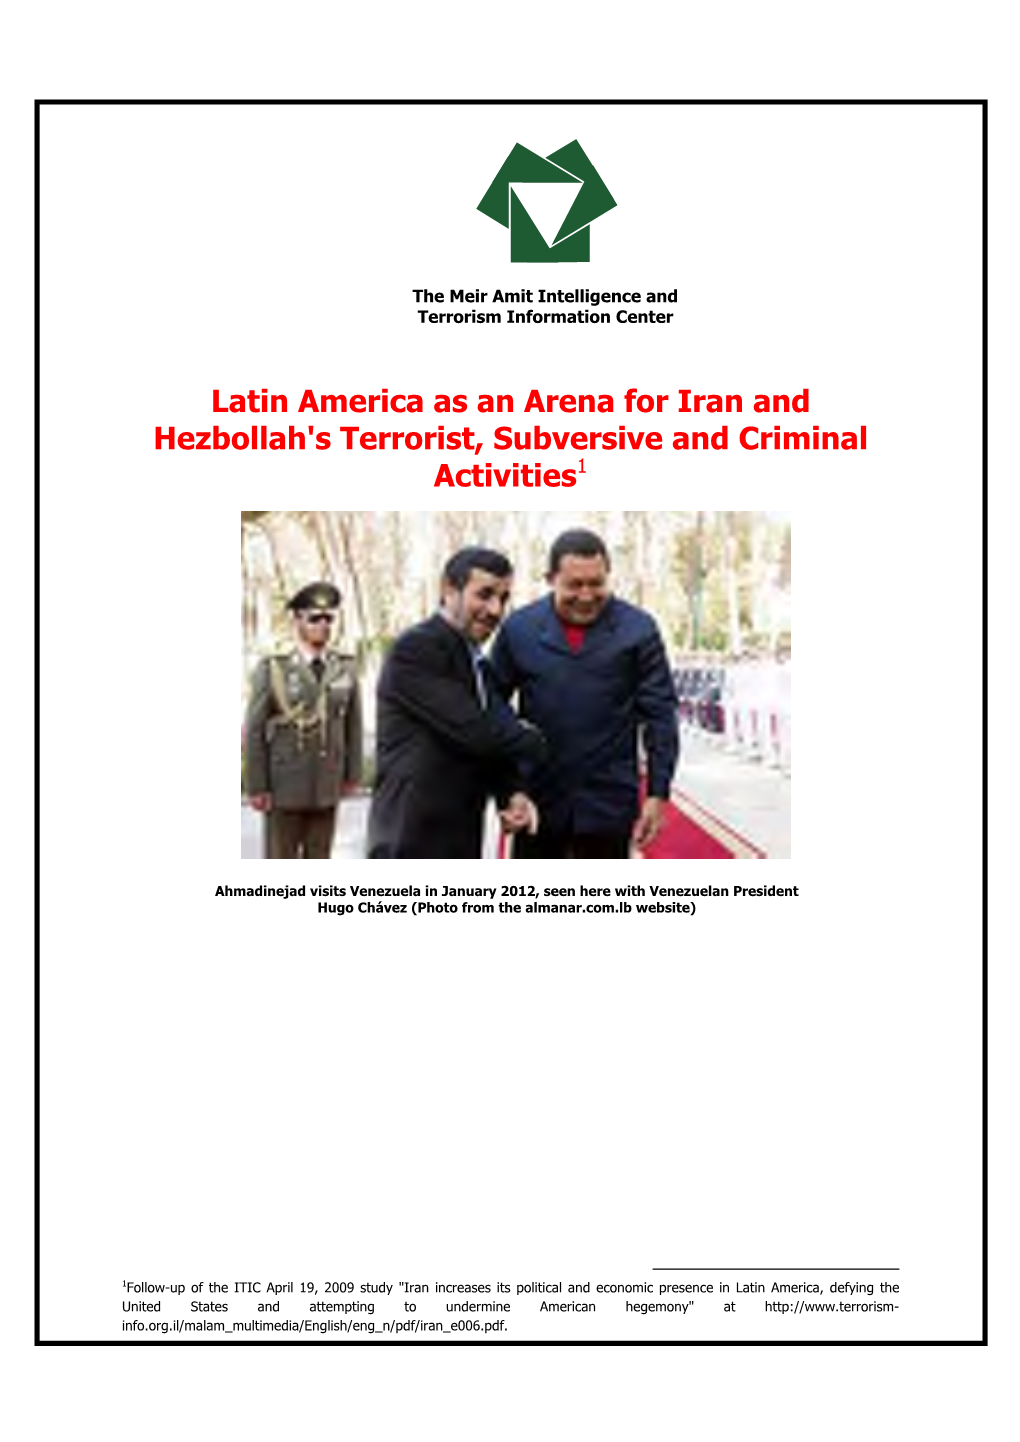 Latin America As a Terrorist, Subversive, Criminal Arena for Iran